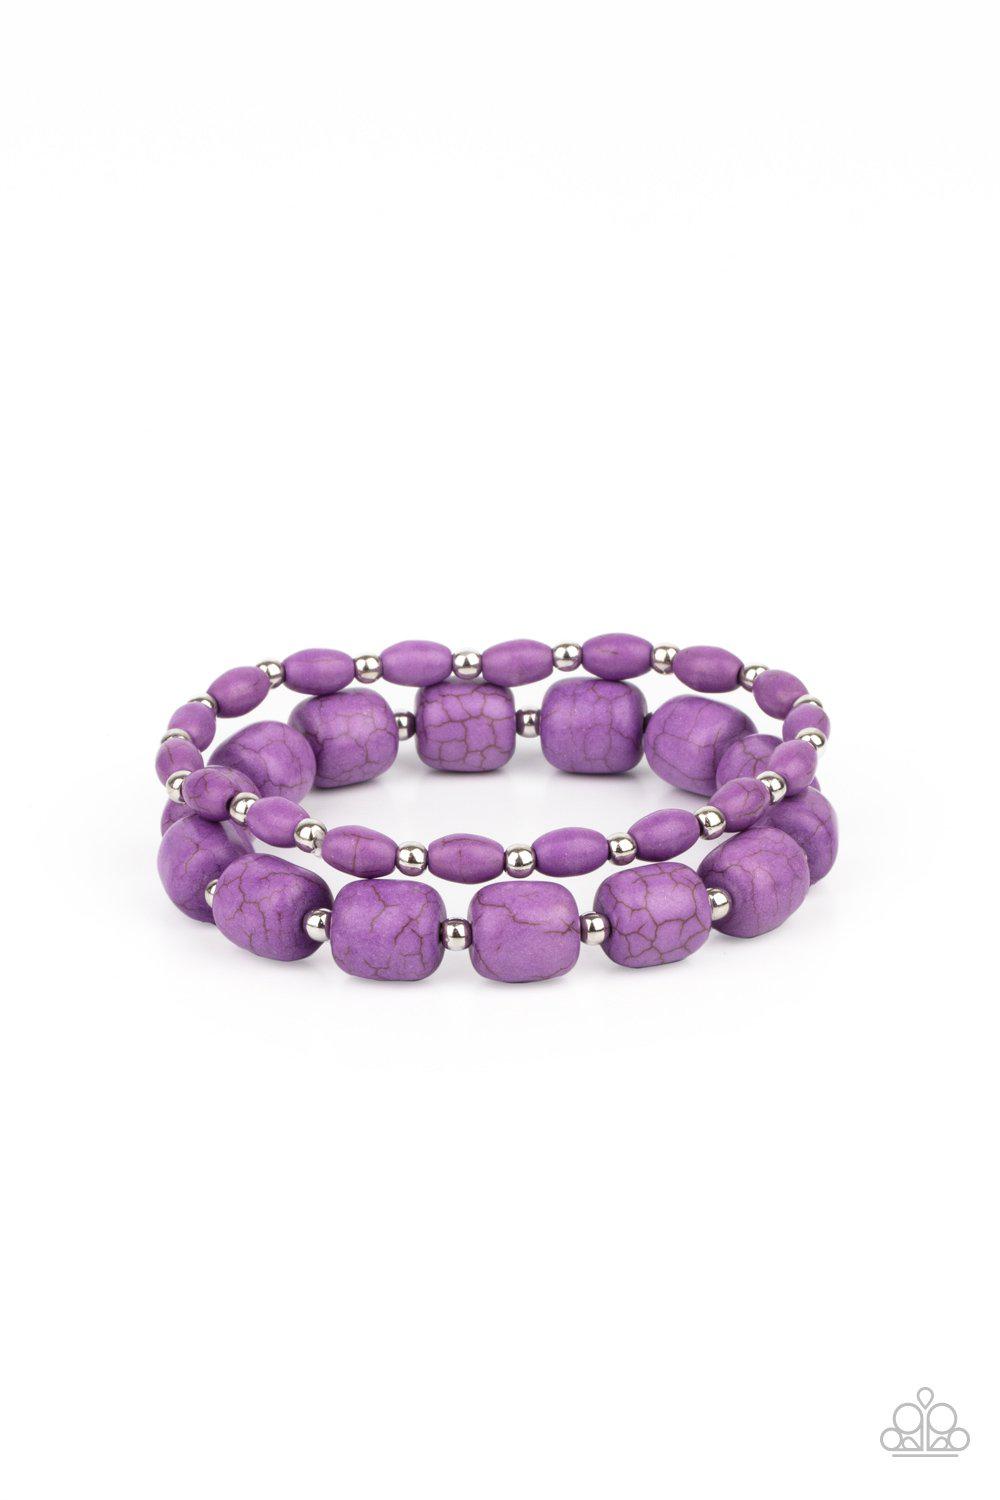 Natural Purple Amethyst Gemstone Beads Energy Charm Bracelet